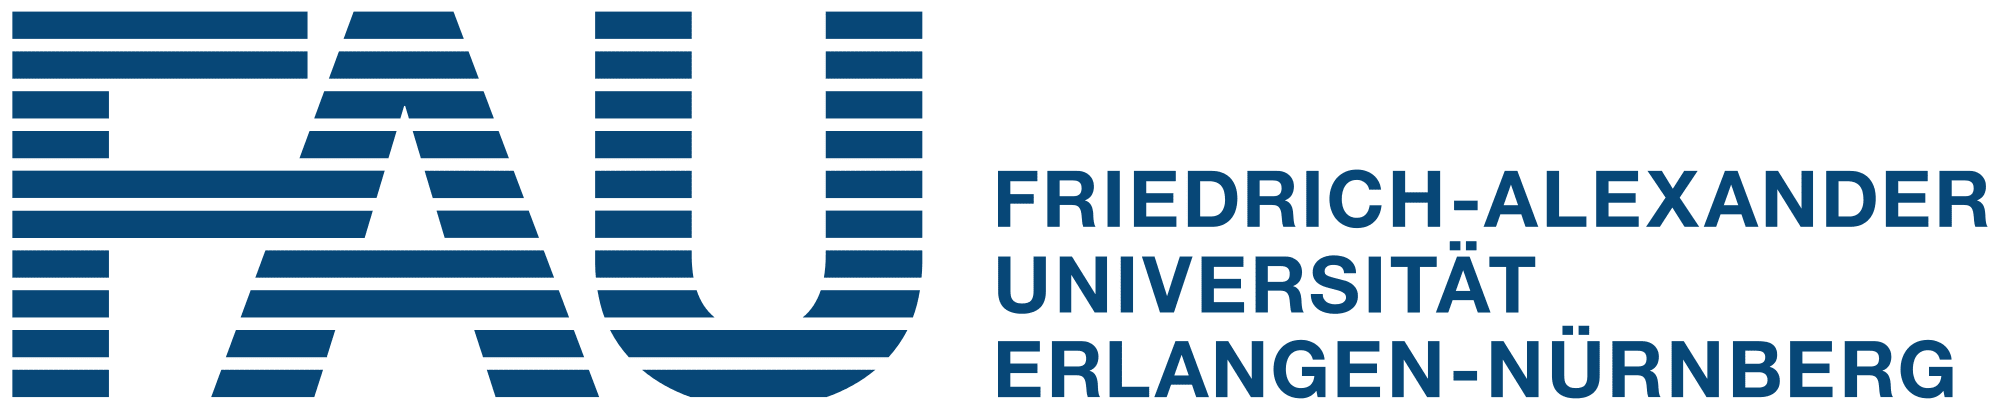 Friedrich-Alexander Universität Erlangen-Nürnberg (FAU)